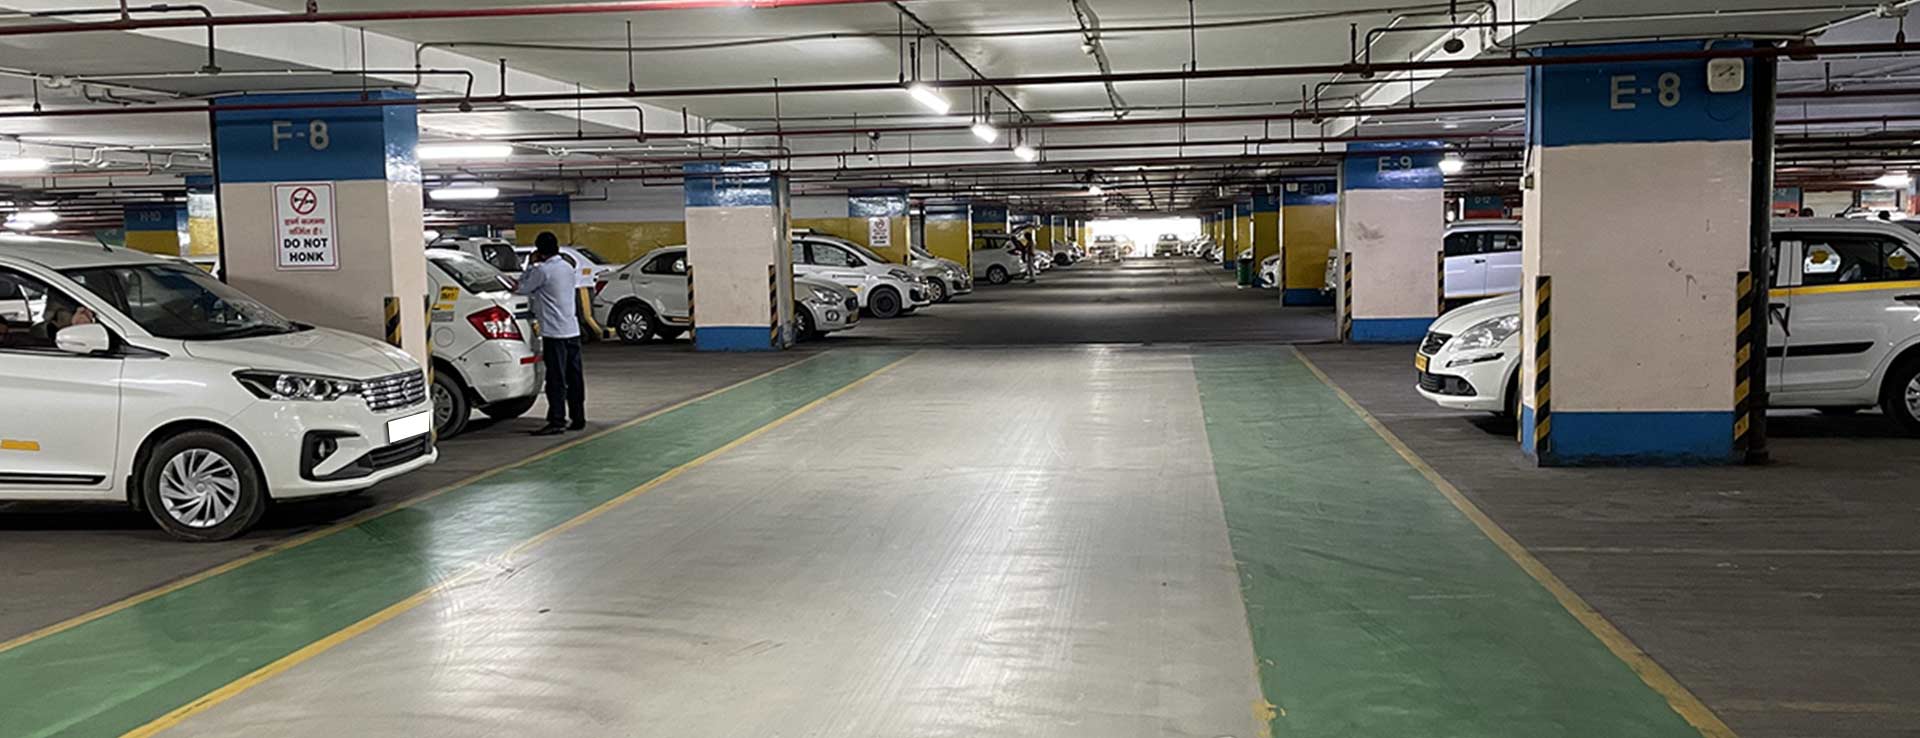 Premium Lane Parking at New Delhi Airport